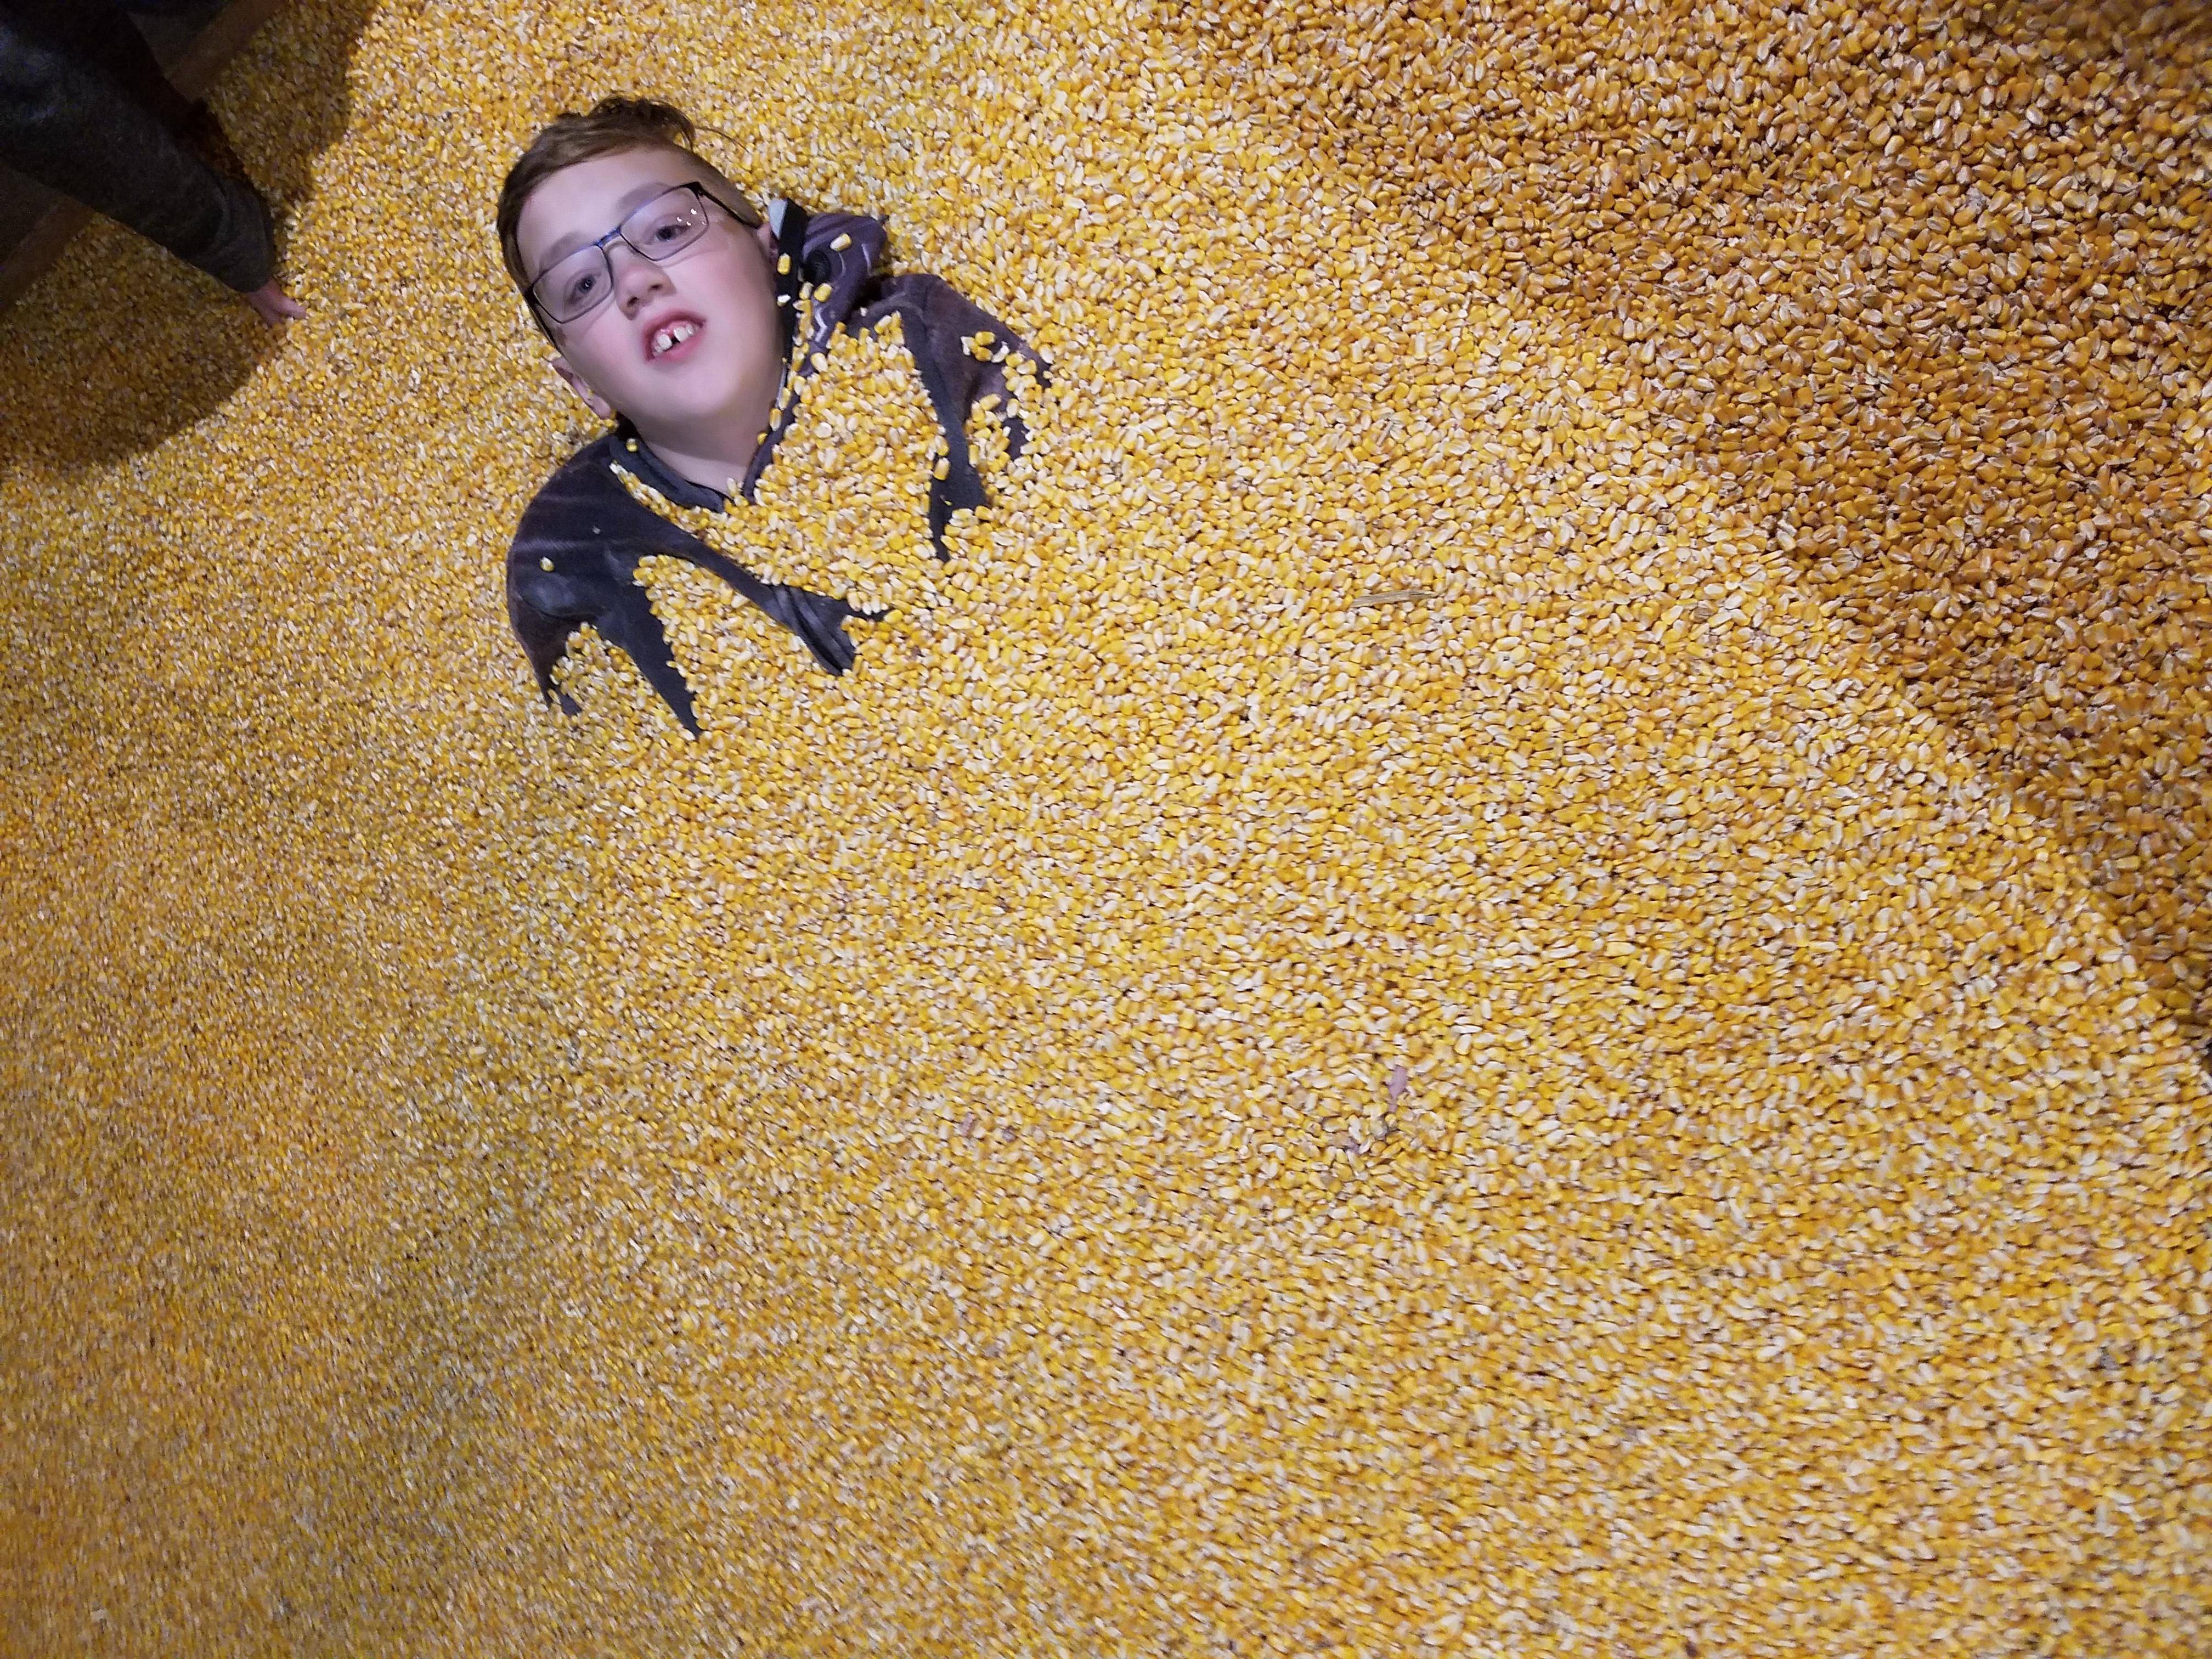 buried in corn